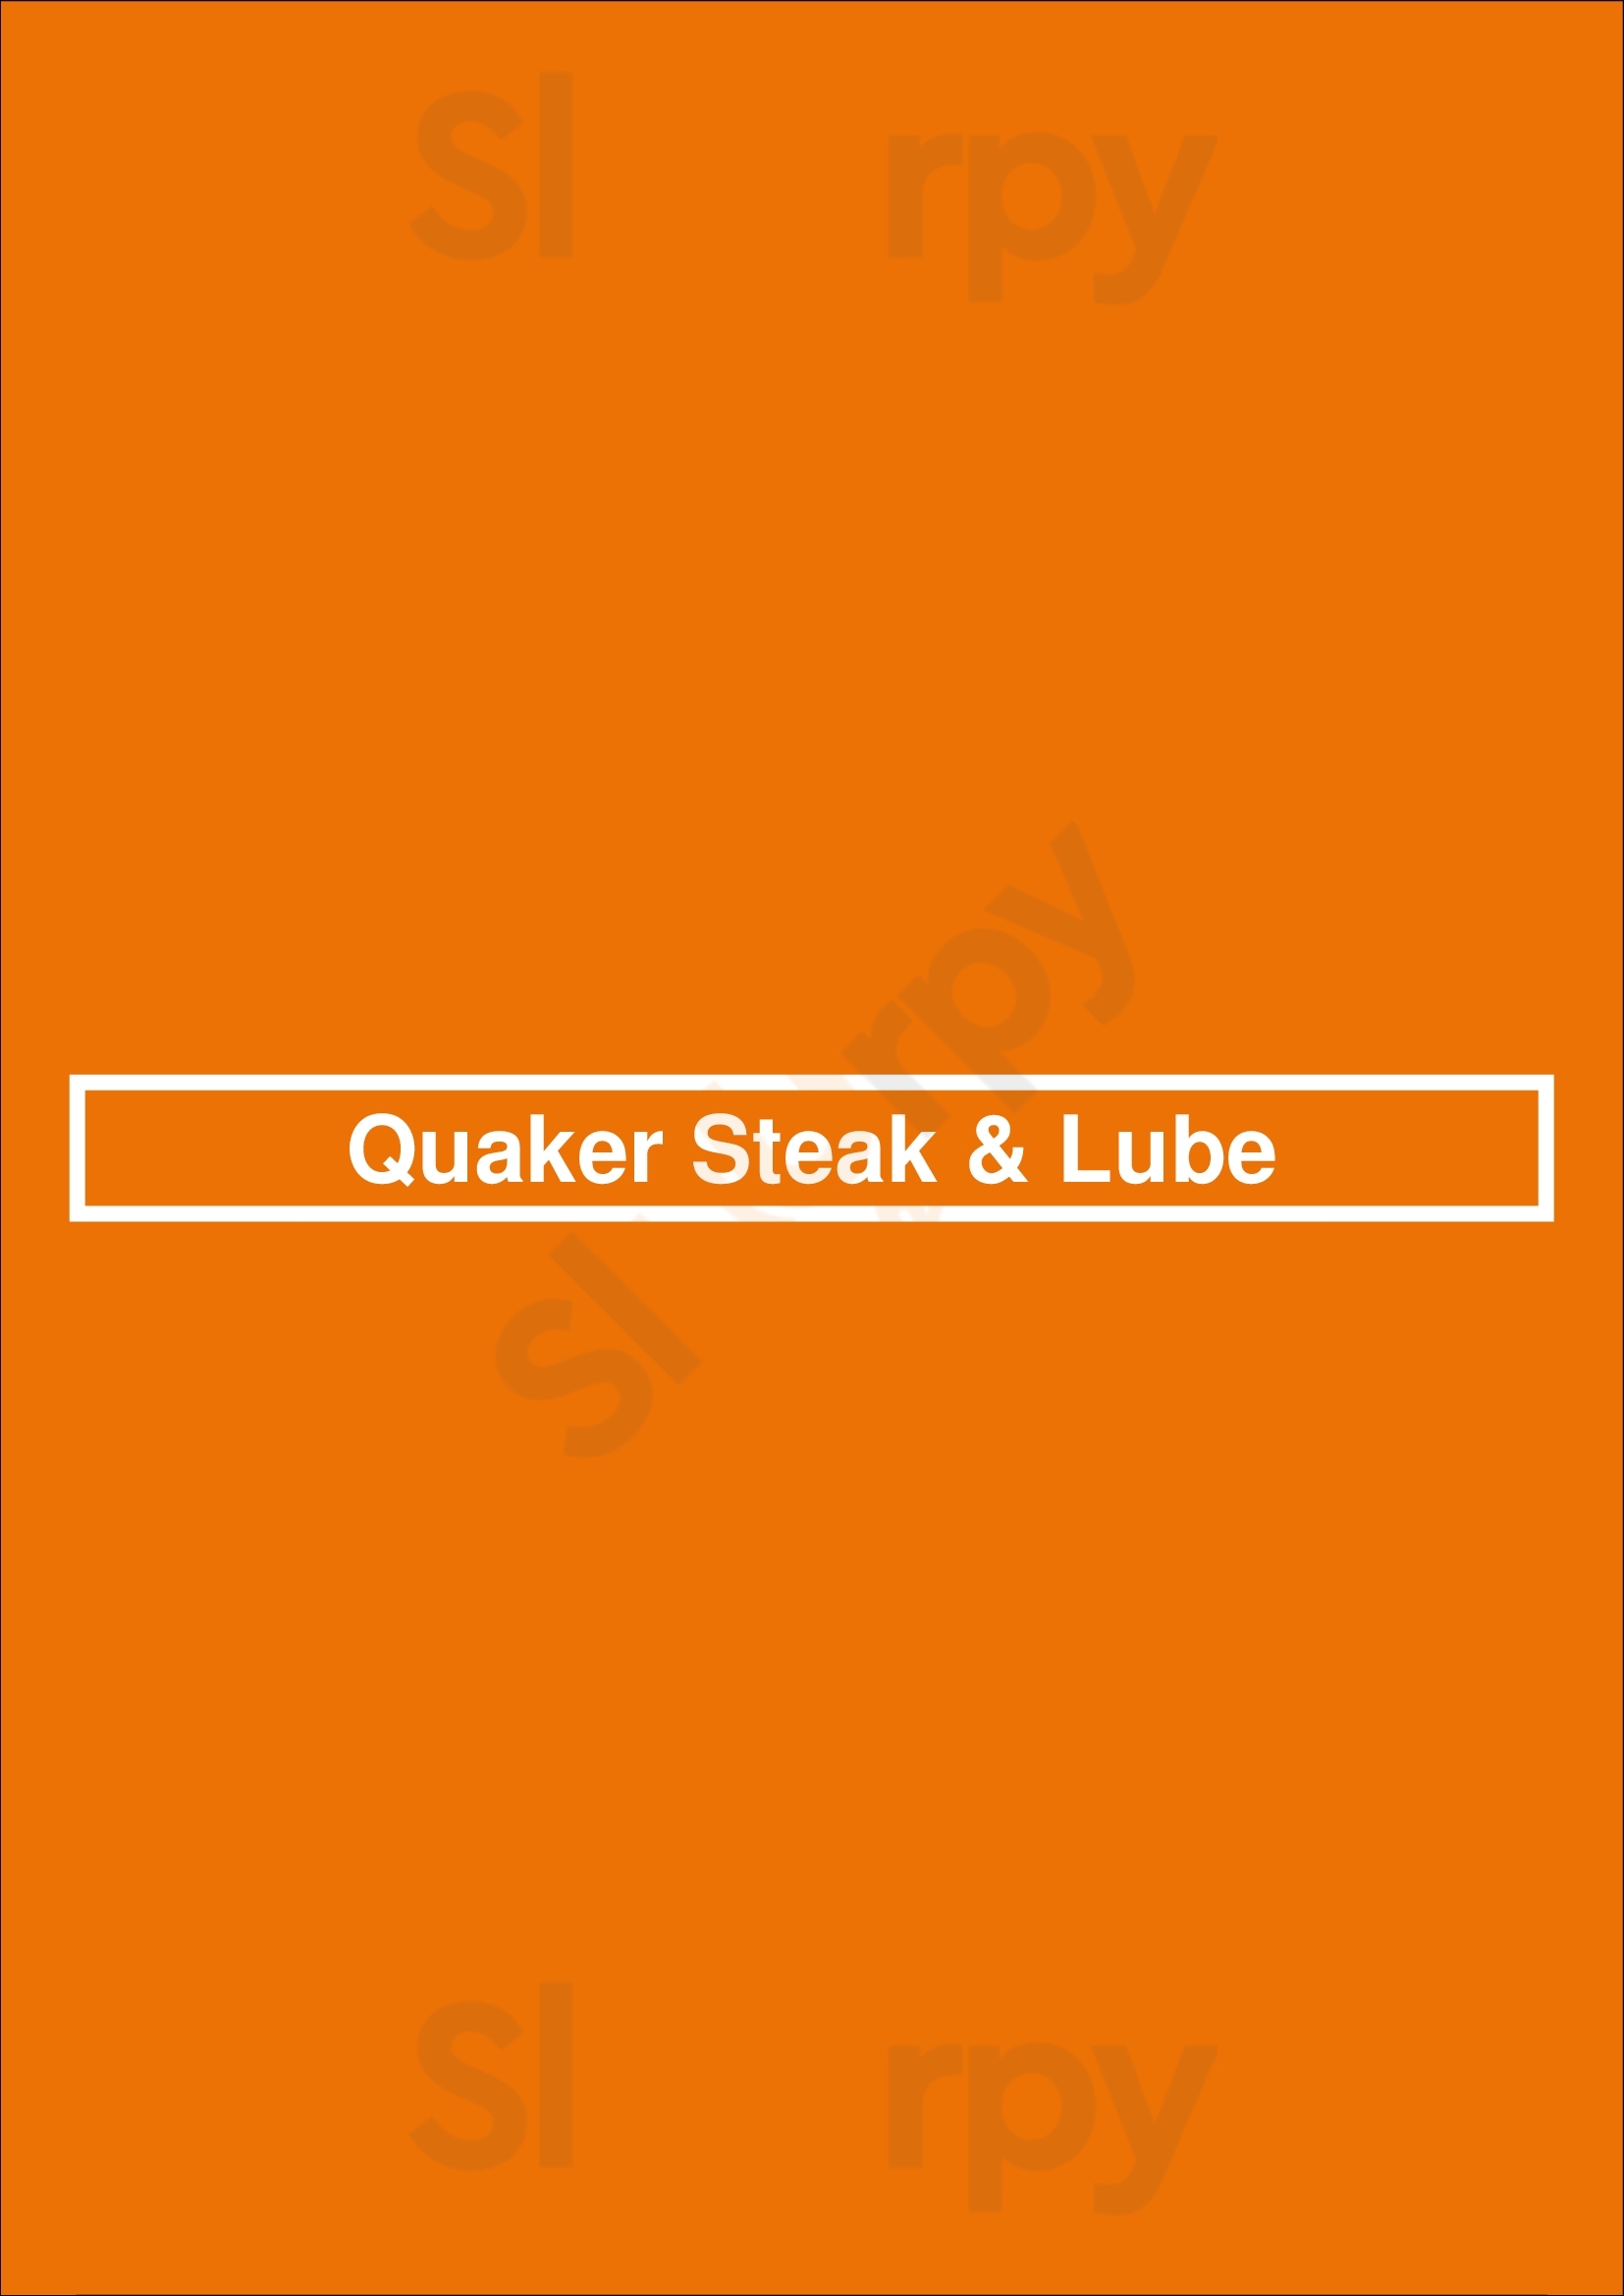 Quaker Steak & Lube Columbus Menu - 1